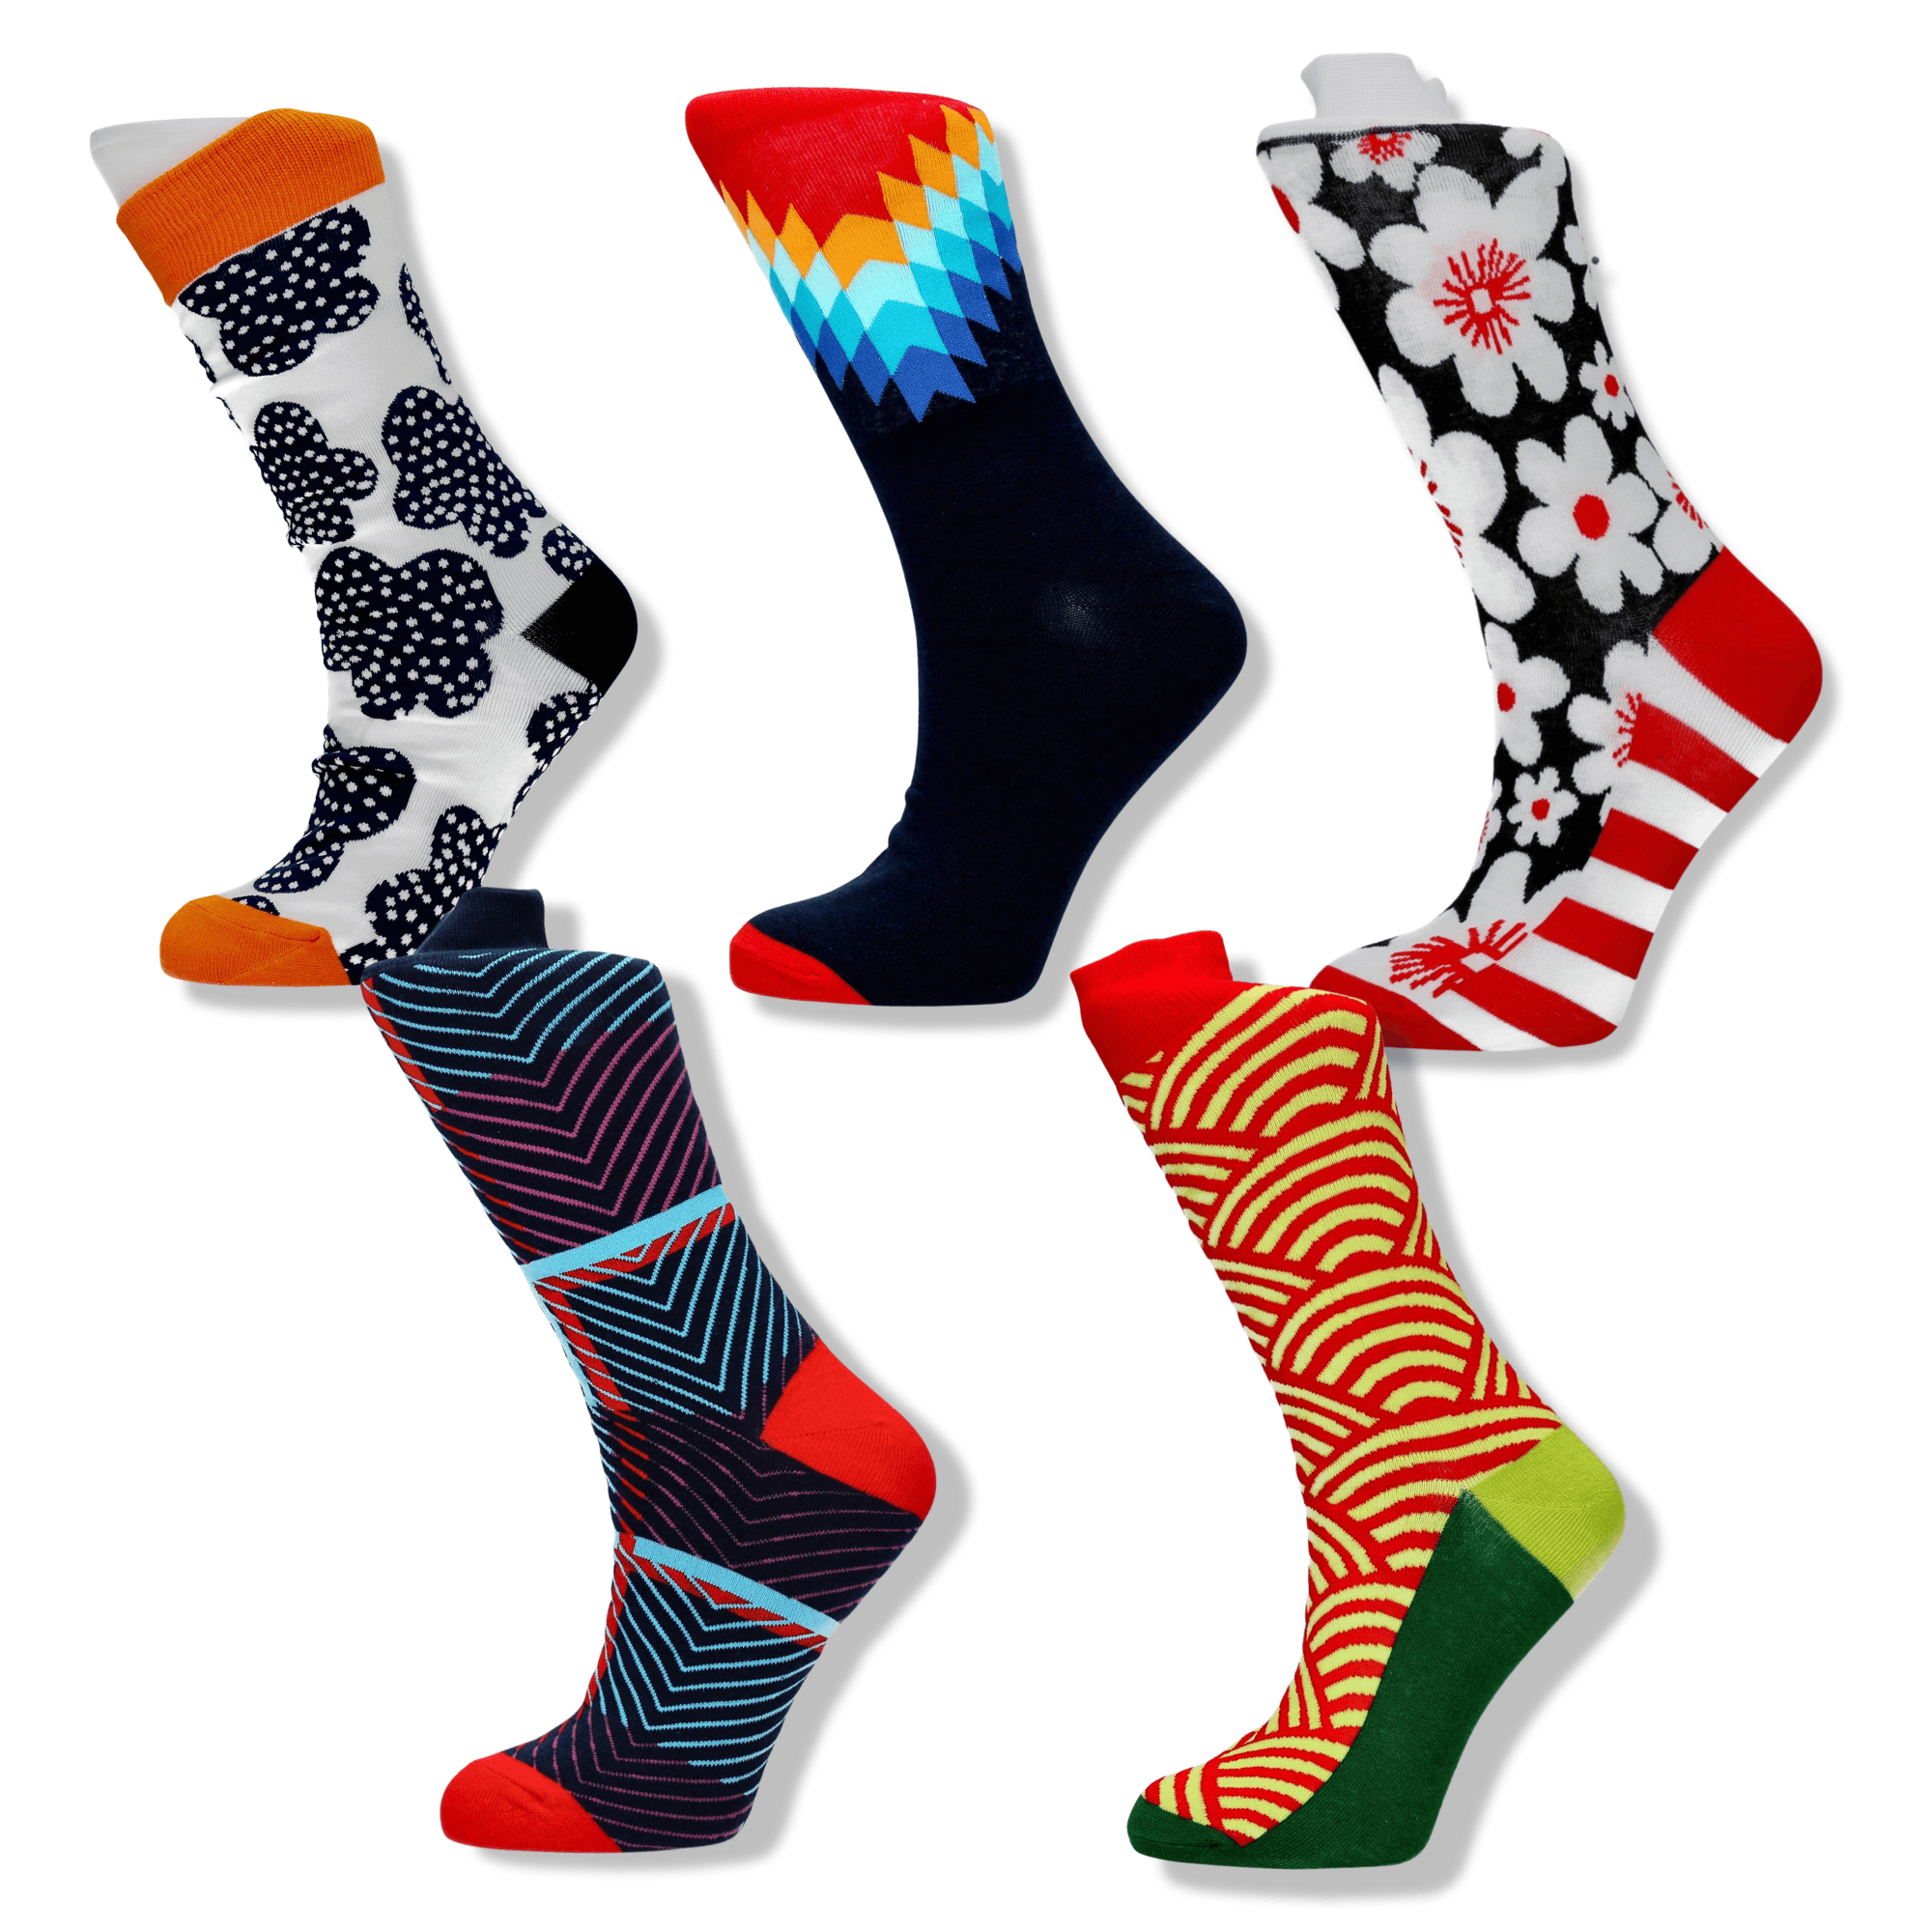 Pack of 5 pairs of socks - Geometric